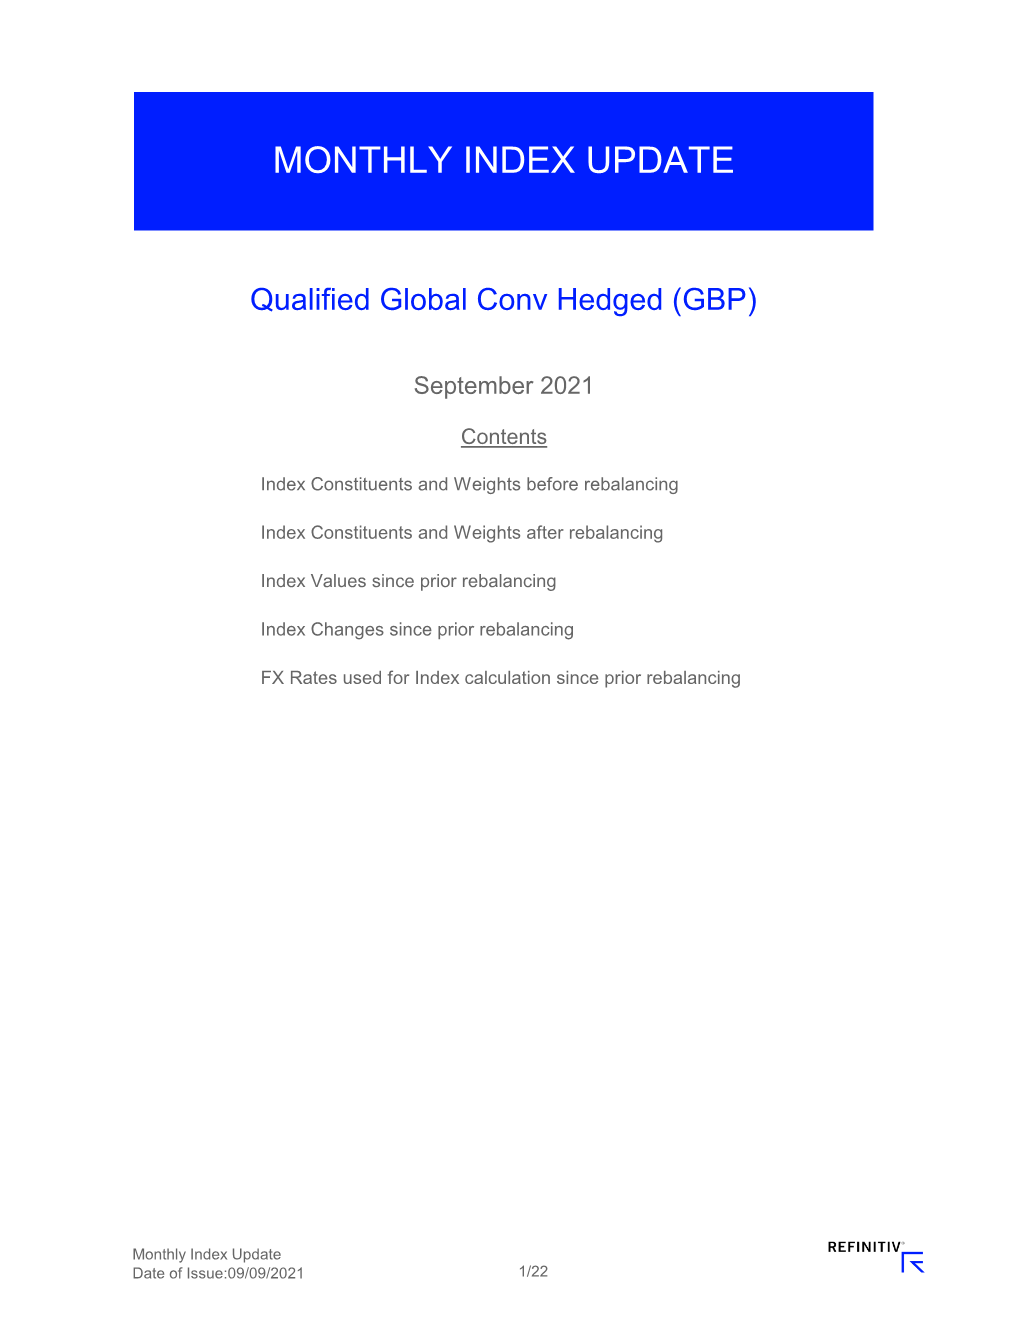 Monthly Index Update